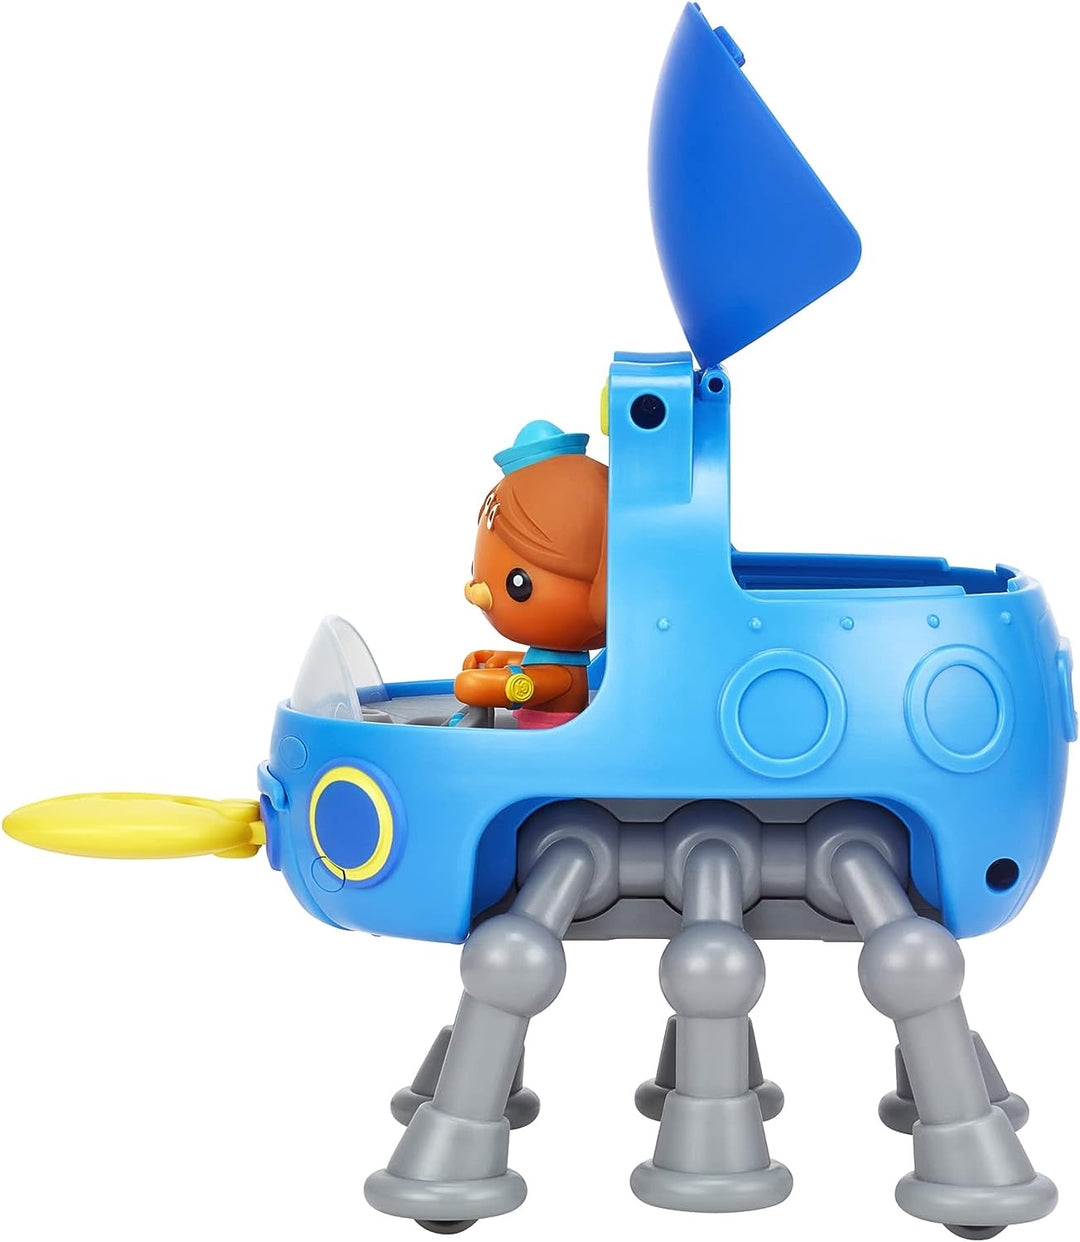 Octonauts 61108 Above & Beyond | Deluxe Toy Vehicle & Figure